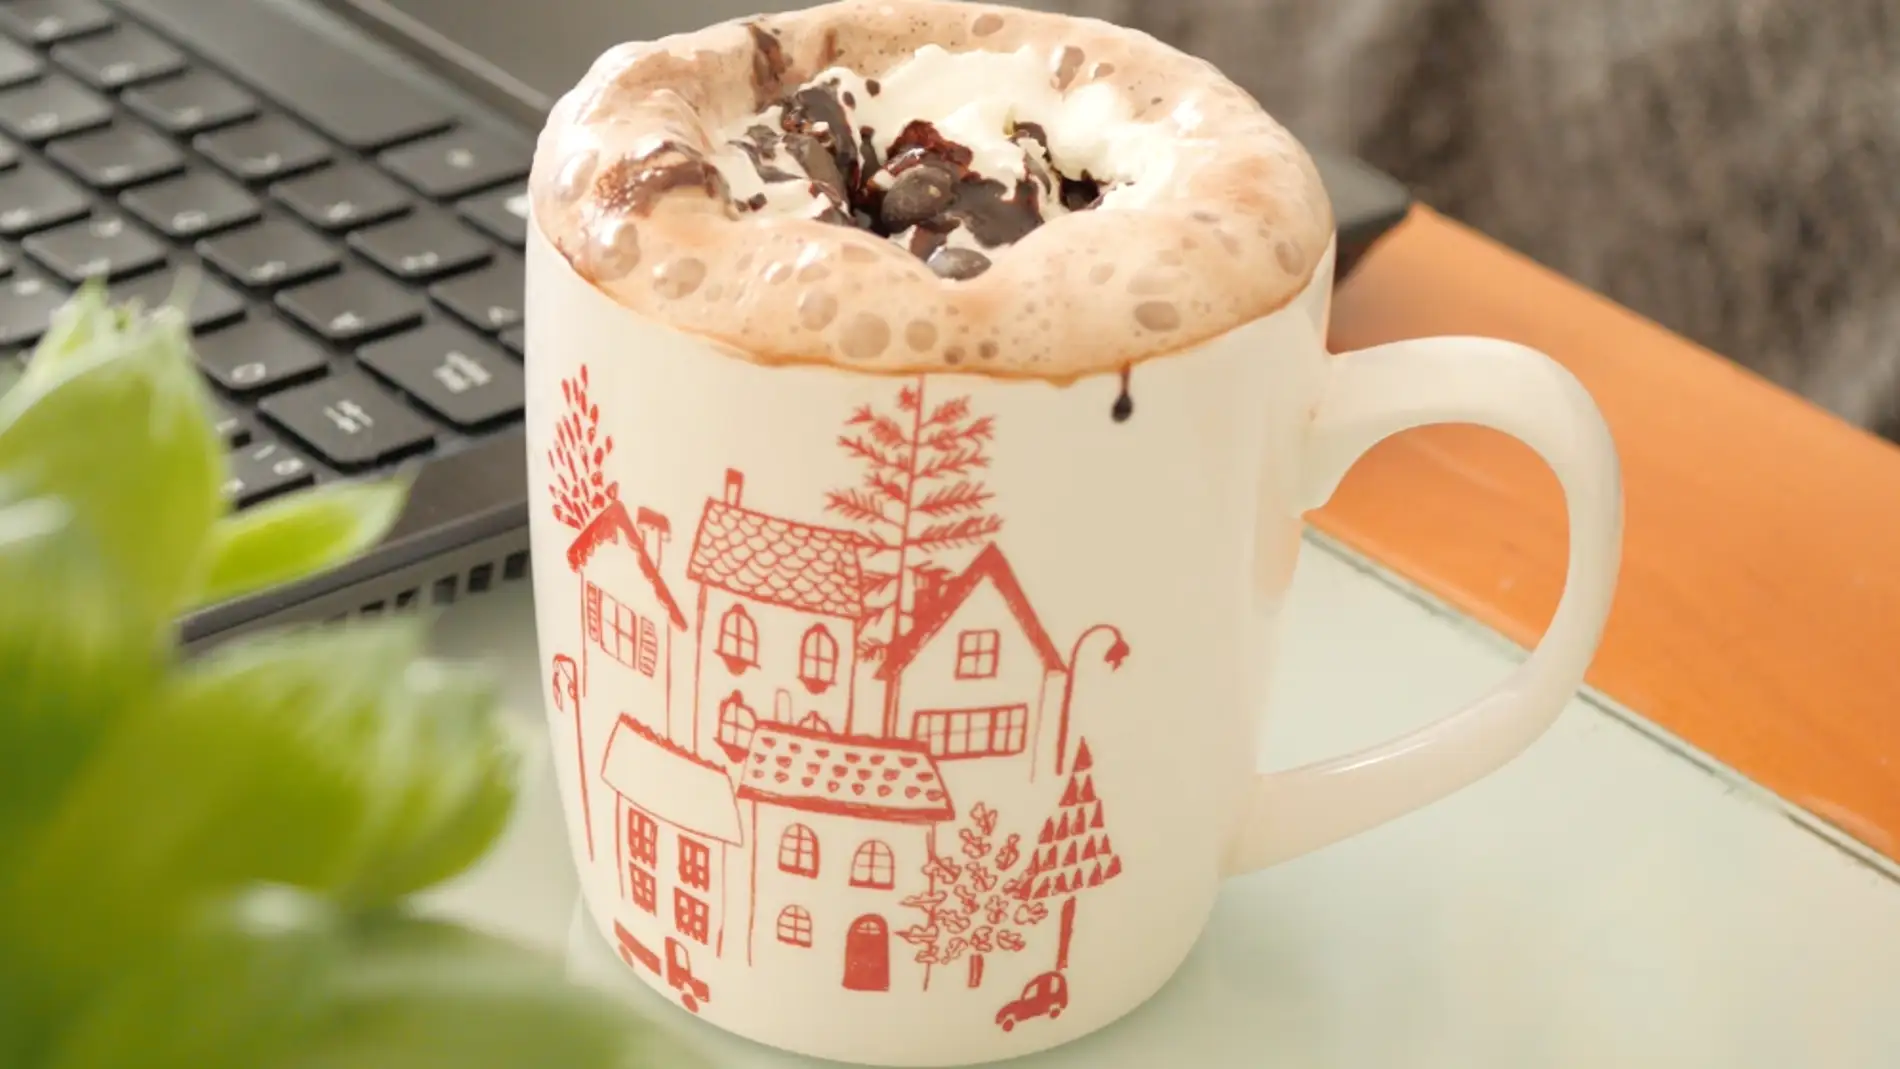 El chocolate caliente al estilo Starbucks, ¡ñam!